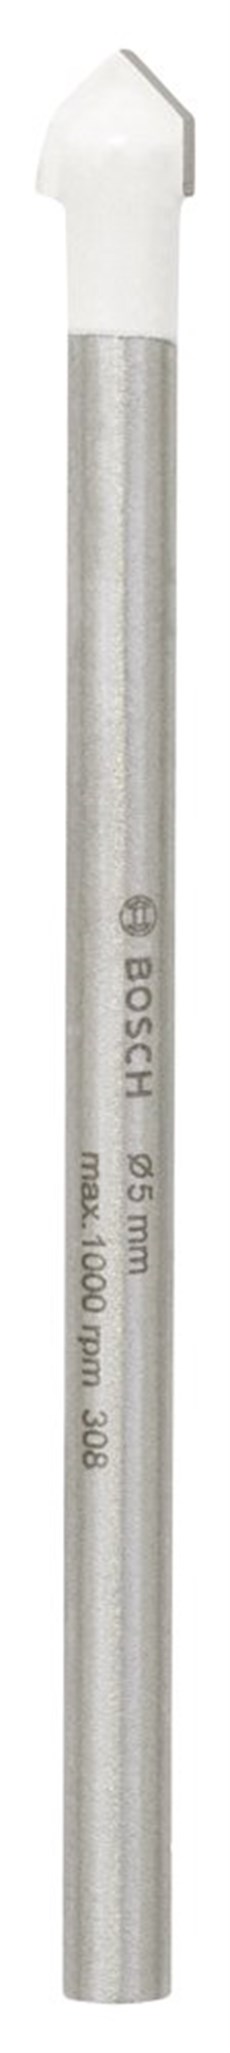 Bosch - cyl-9 Serisi Seramik Matkap Ucu 5*70 mm